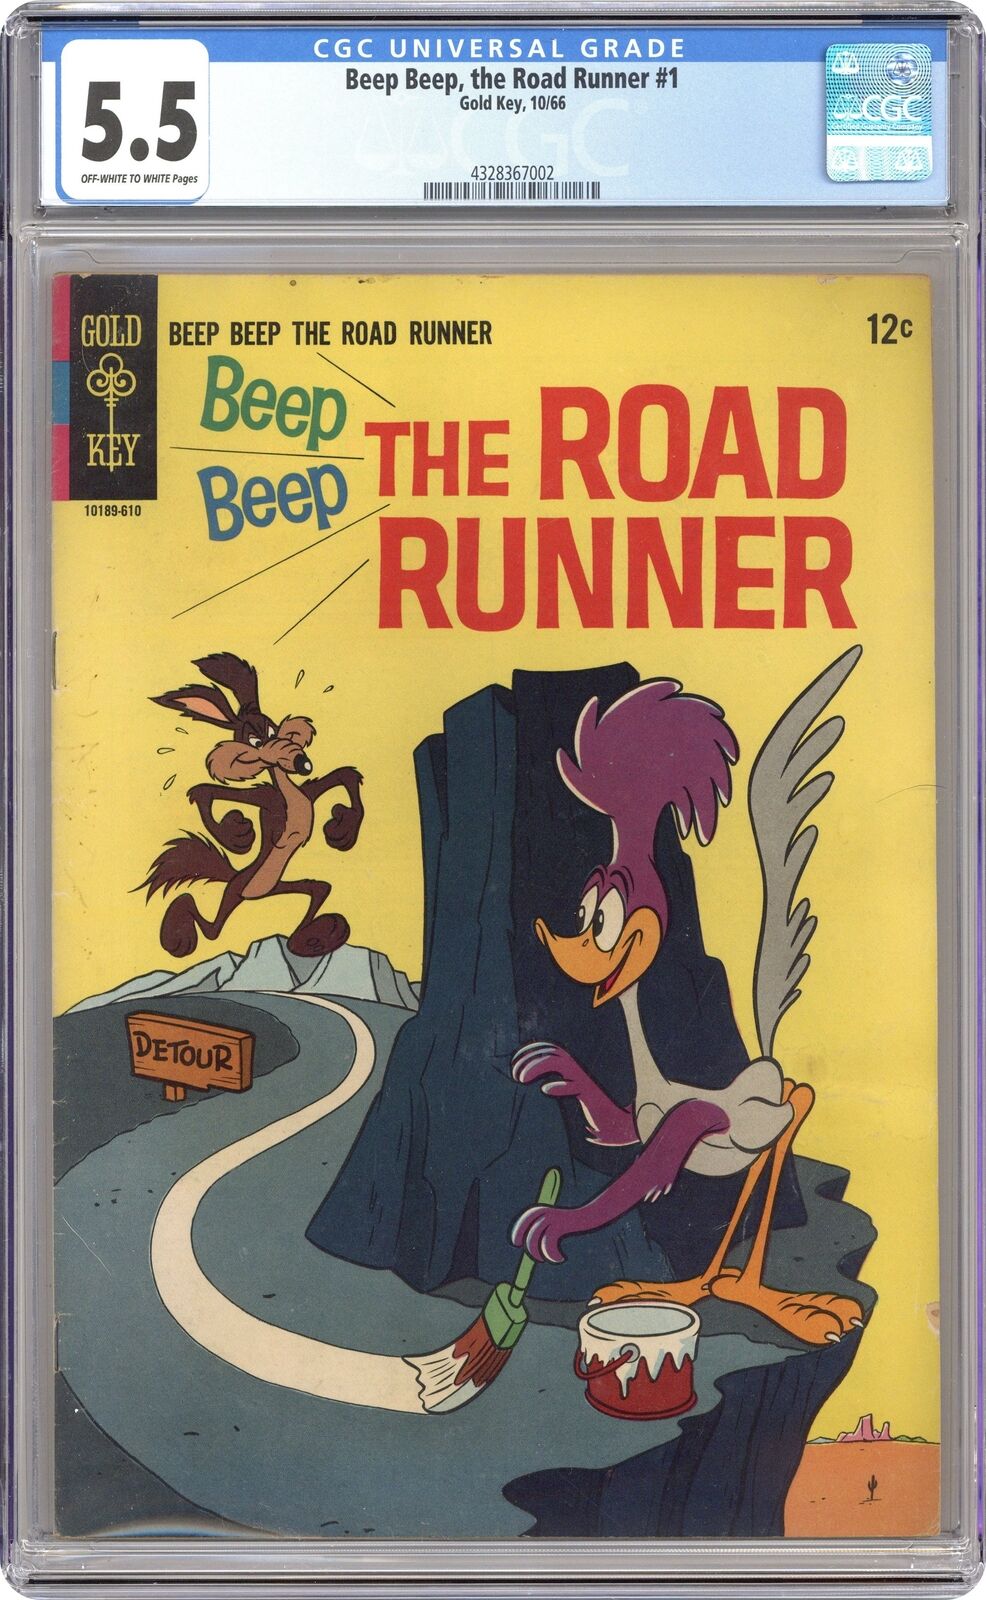 Beep Beep the Road Runner #1 CGC 5.5 1966 4328367002